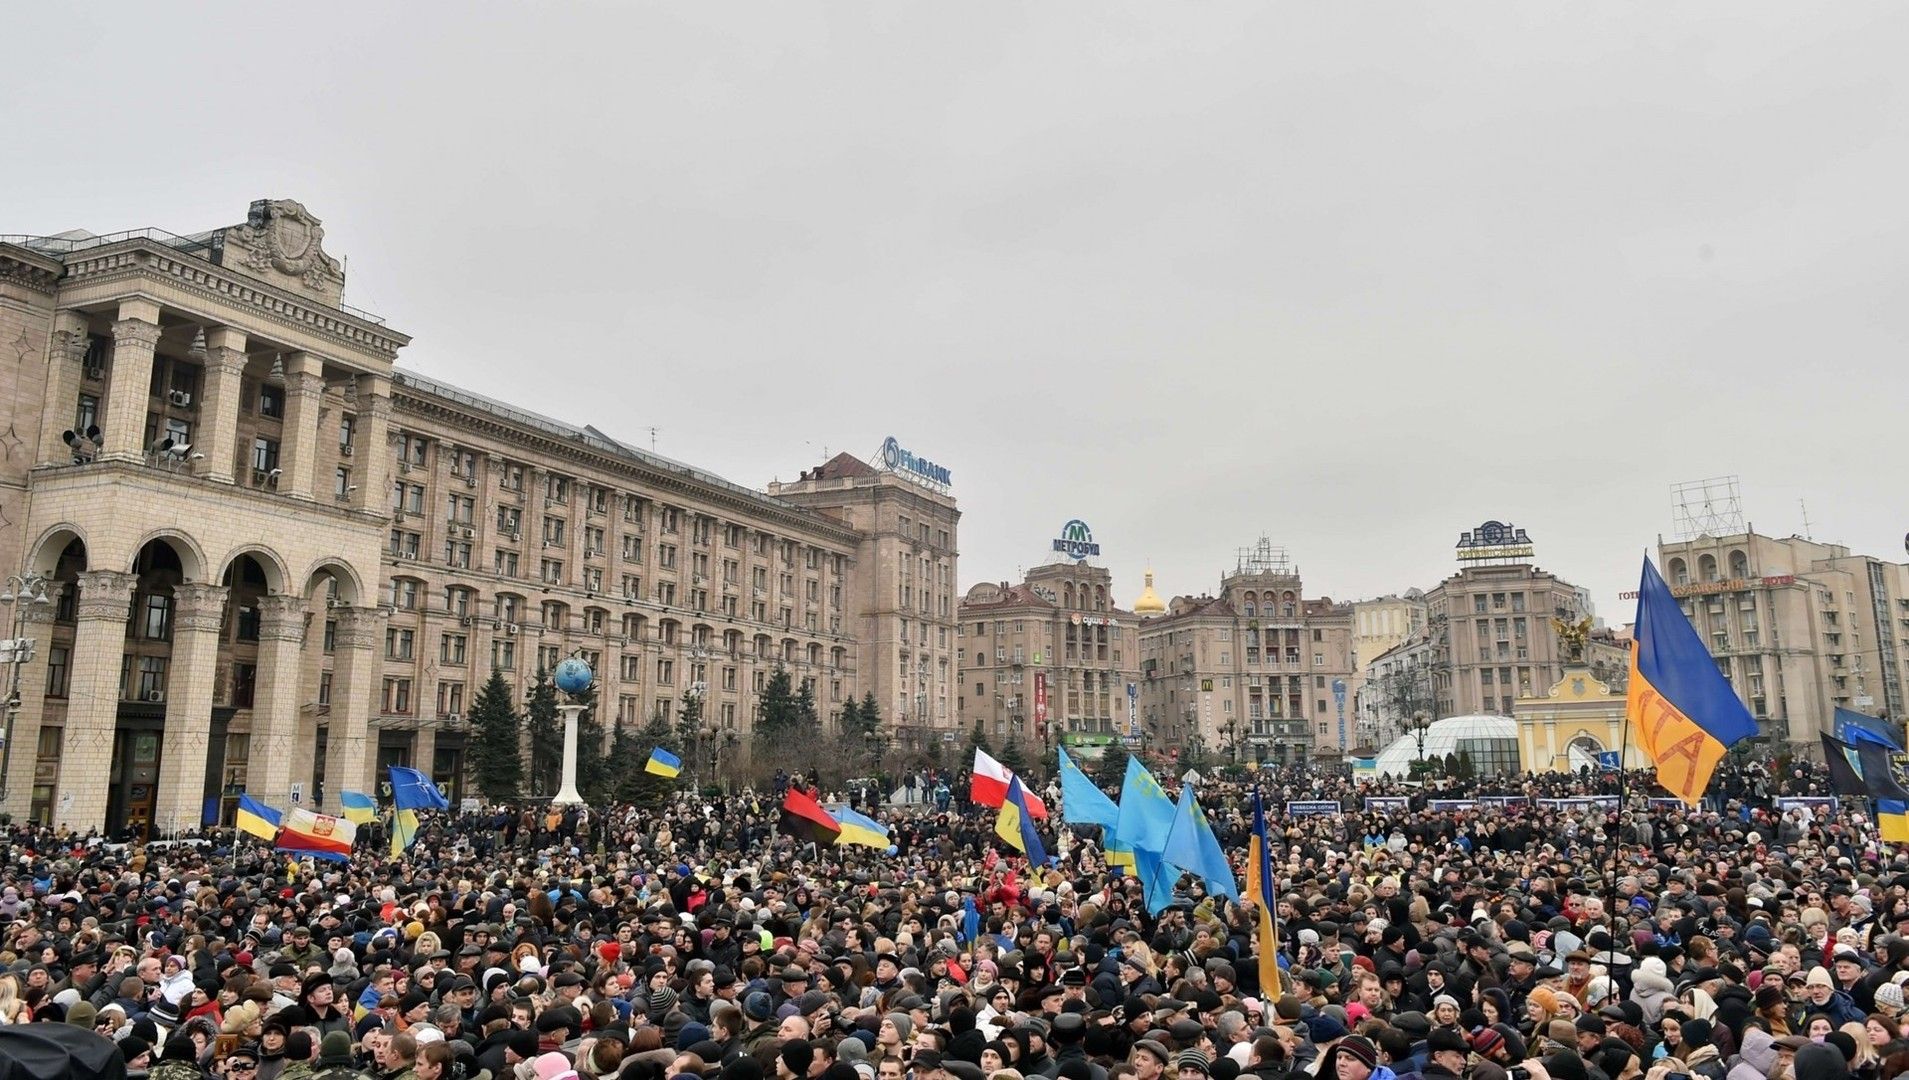 Kyiv People’s Republic: A threat to Ukraine